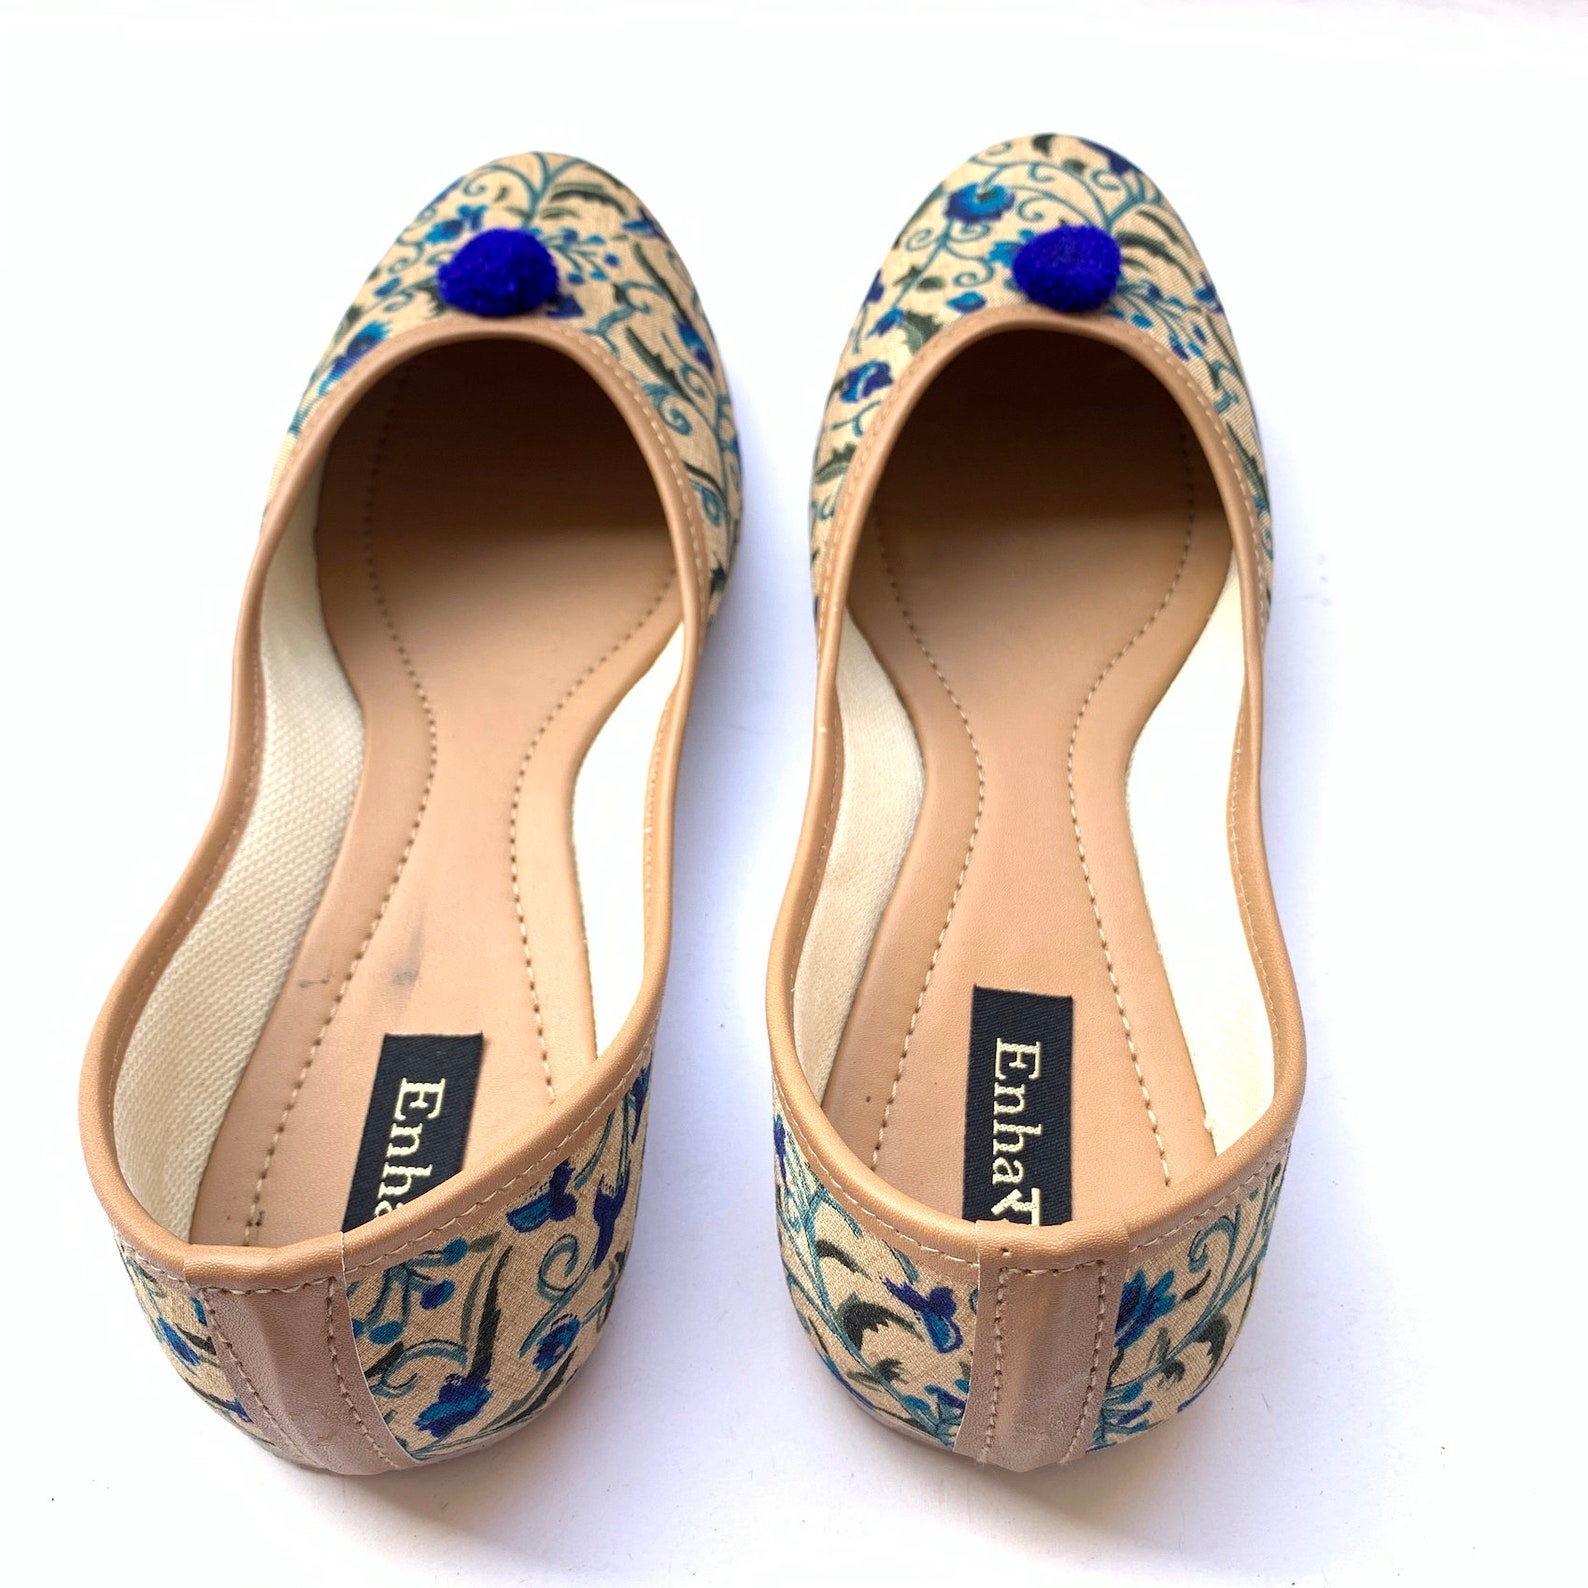 blue floral ballet flat shoes for women, slip on shoes, indian shoes, handmade designer shoes